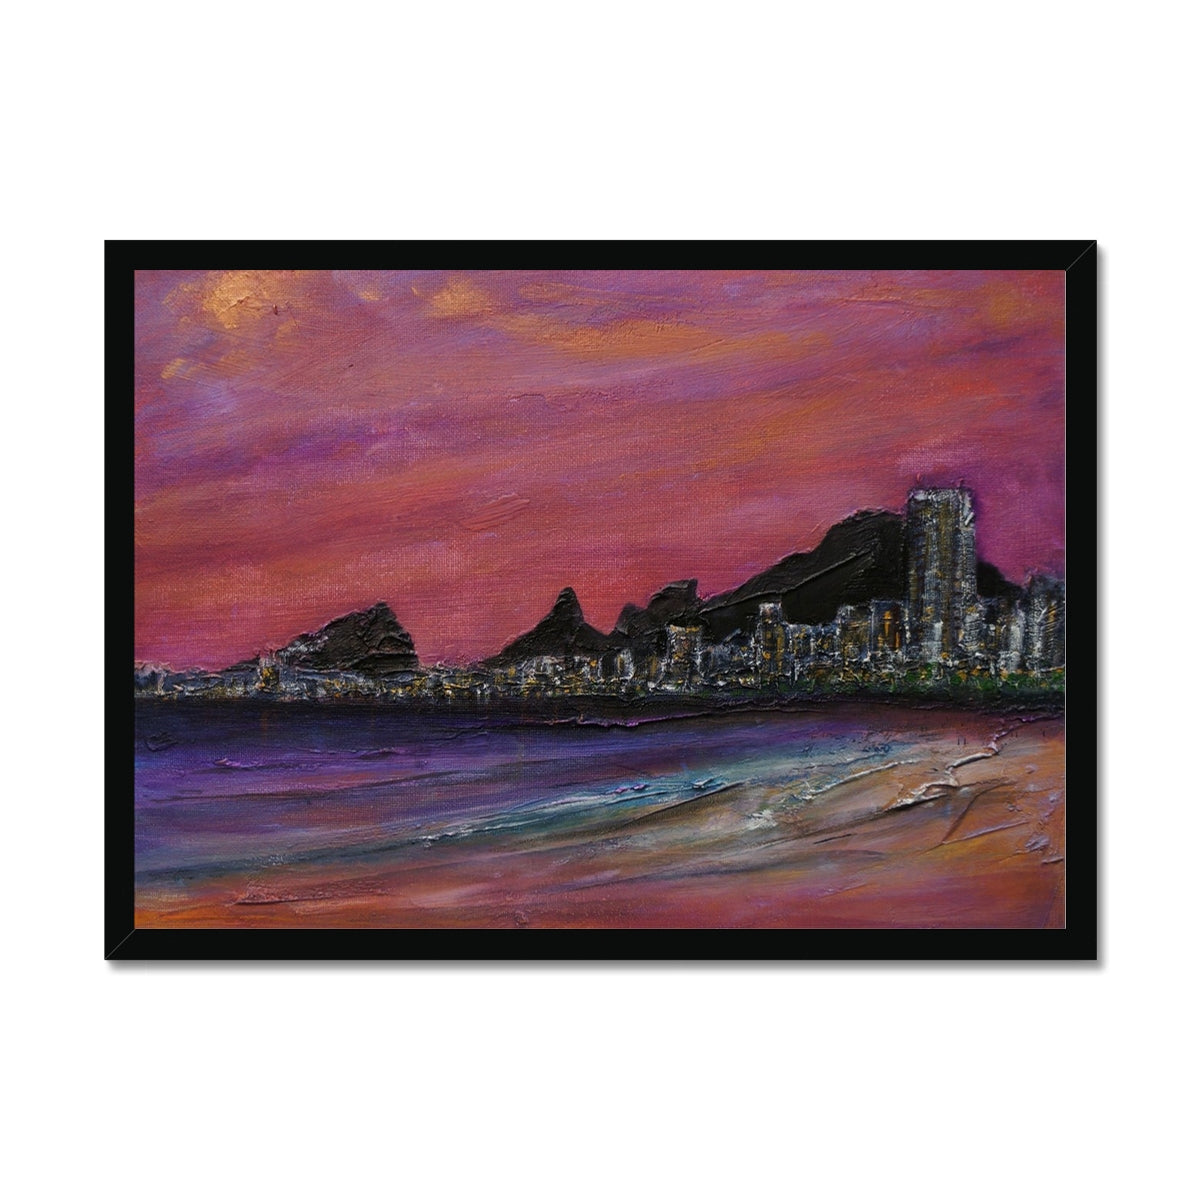 Copacabana Beach Dusk Painting | Framed Prints From Scotland-Framed Prints-World Art Gallery-A2 Landscape-Black Frame-Paintings, Prints, Homeware, Art Gifts From Scotland By Scottish Artist Kevin Hunter